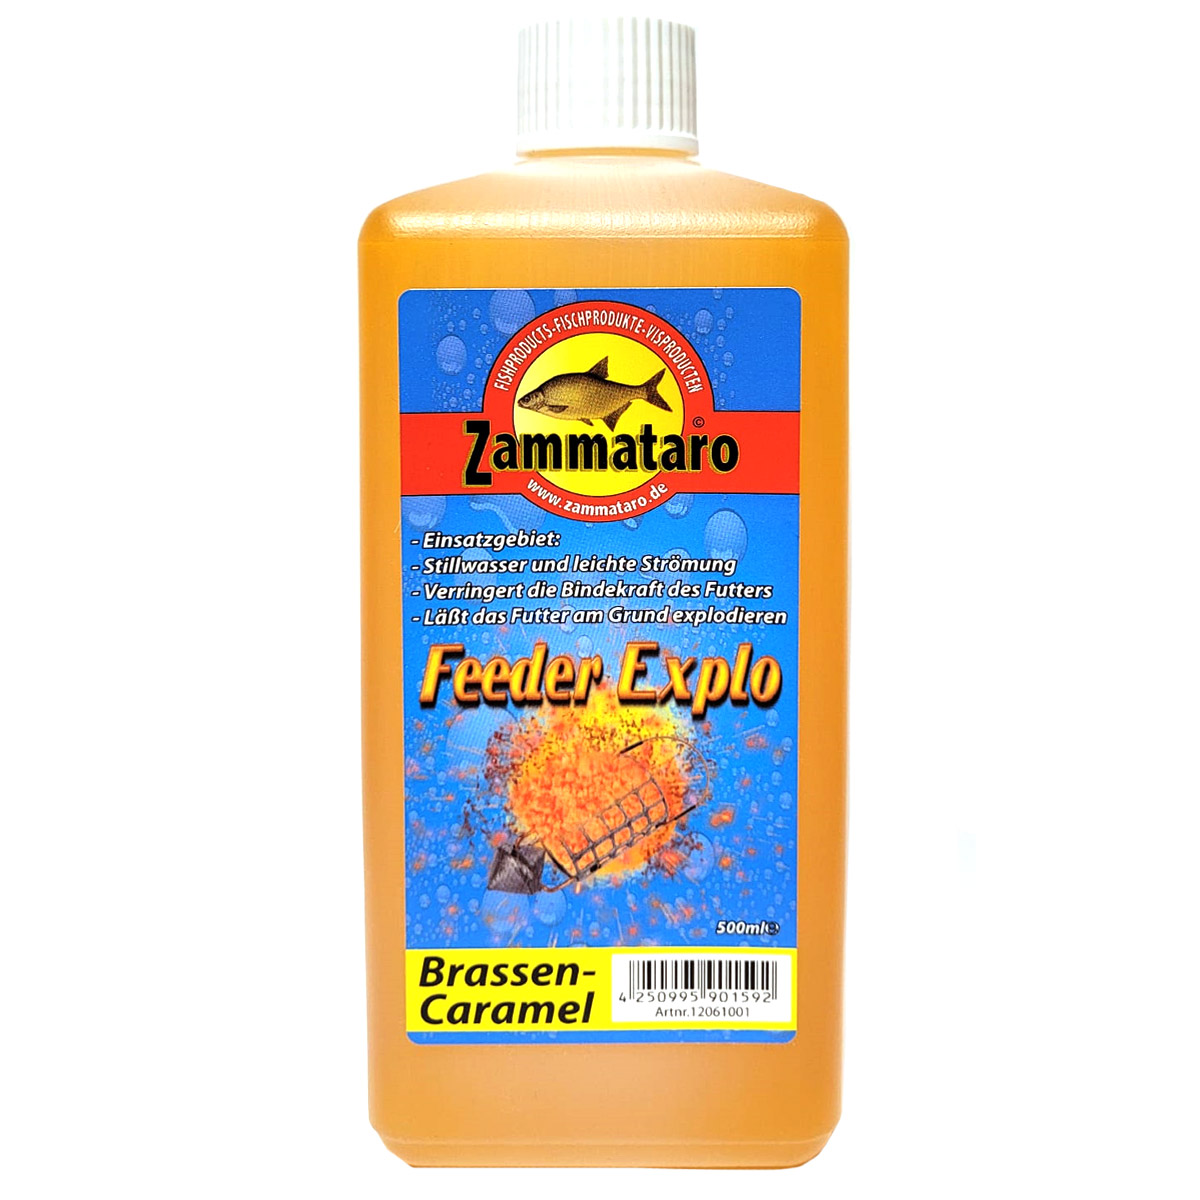 Zammataro Feeder Explo Brassen Caramel 500ml